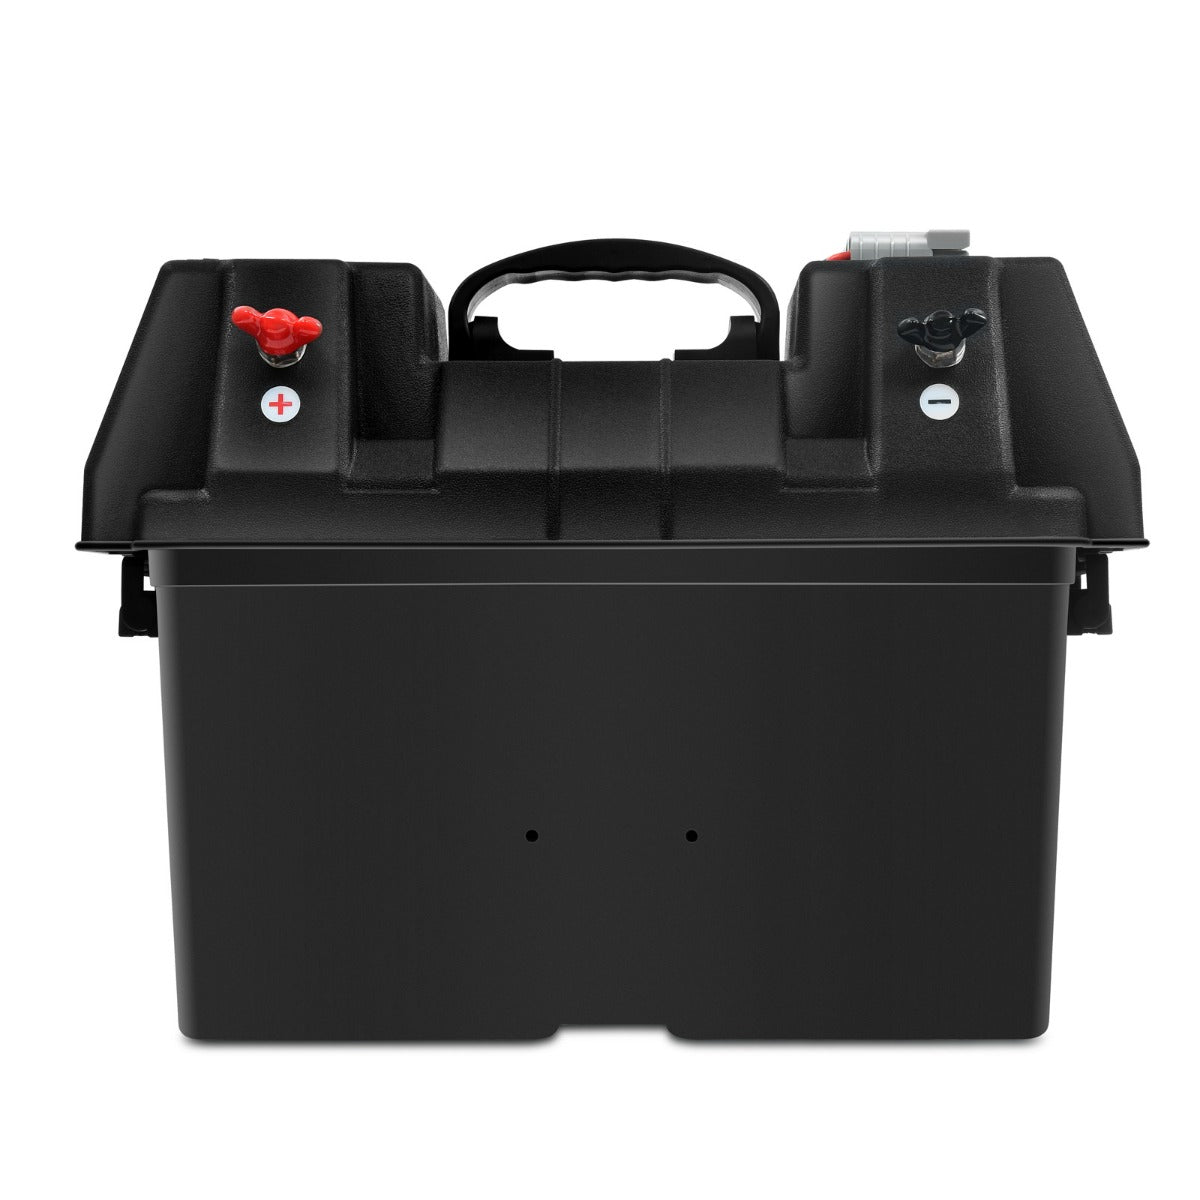 VoltX Battery Box Pro